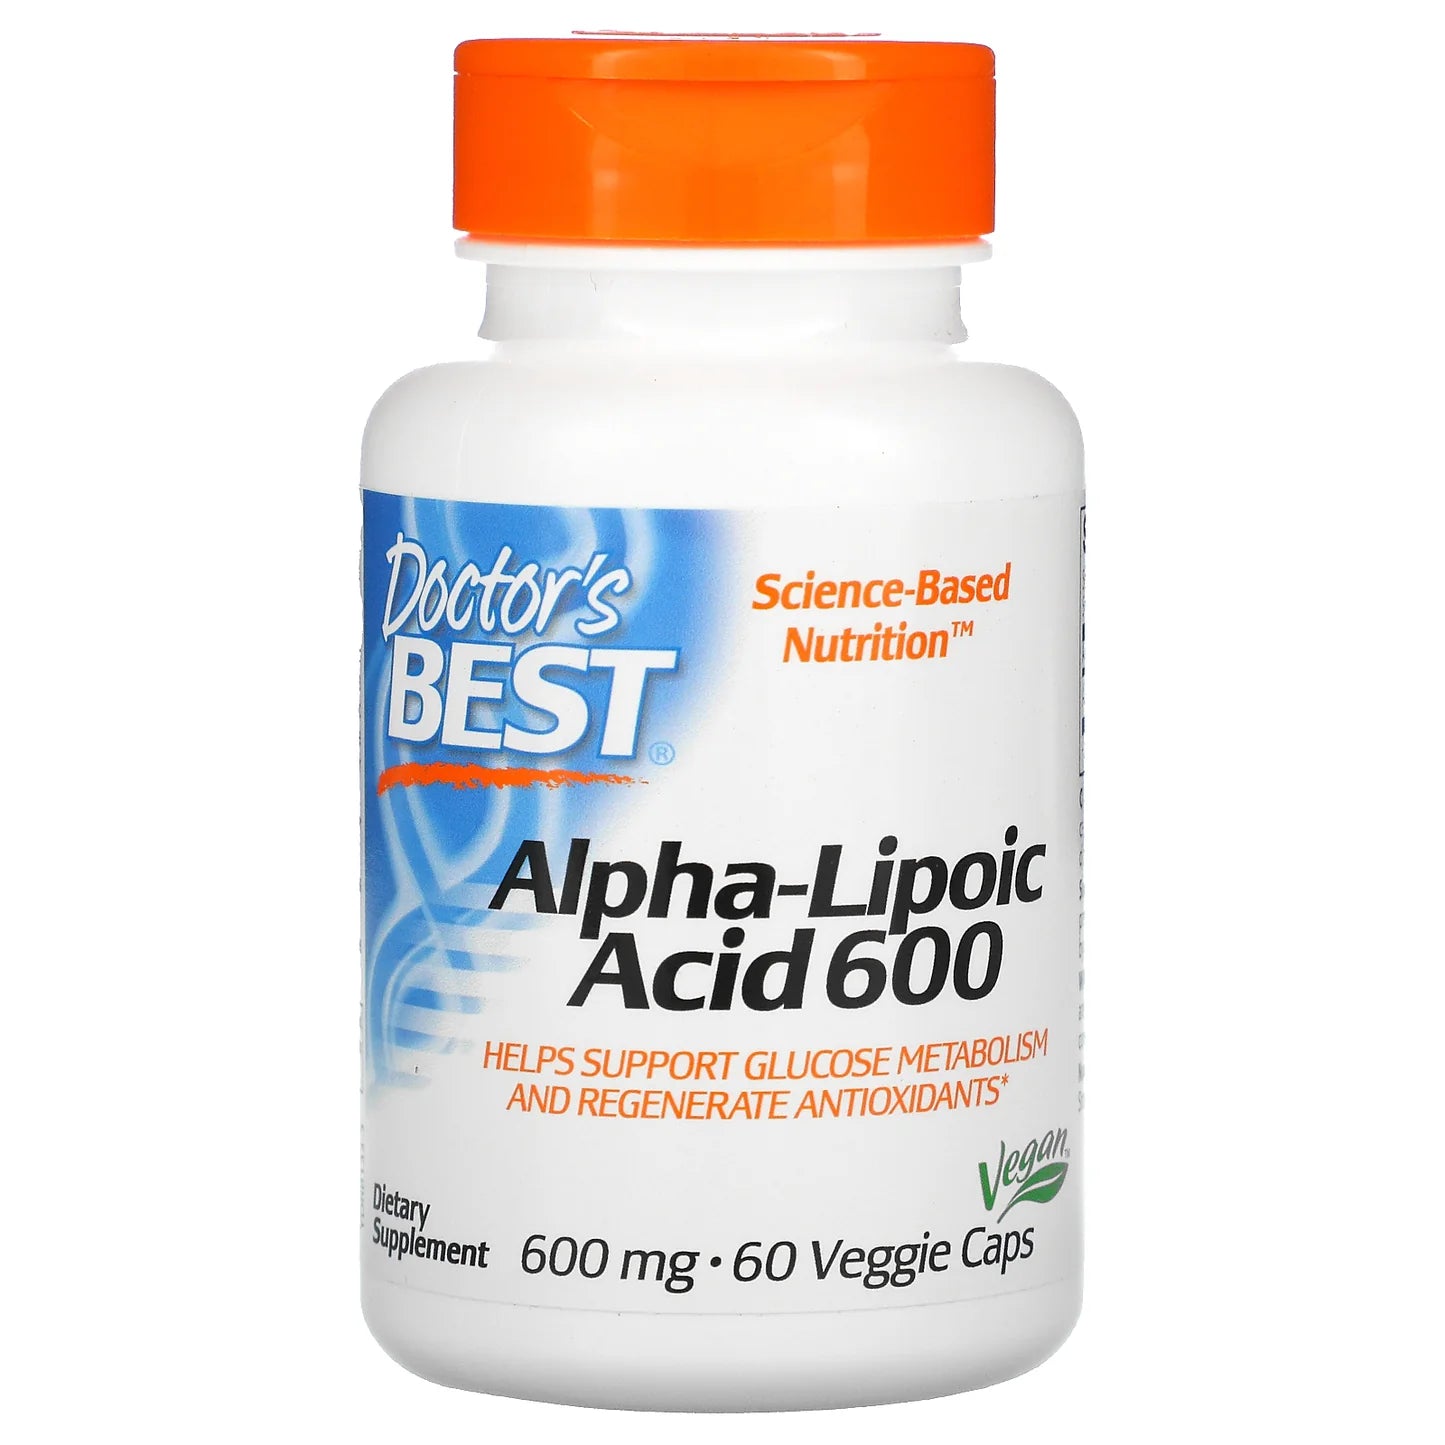 Doctor's Best Alpha-Lipoic Acid, 600 mg, 60 Veggie Caps